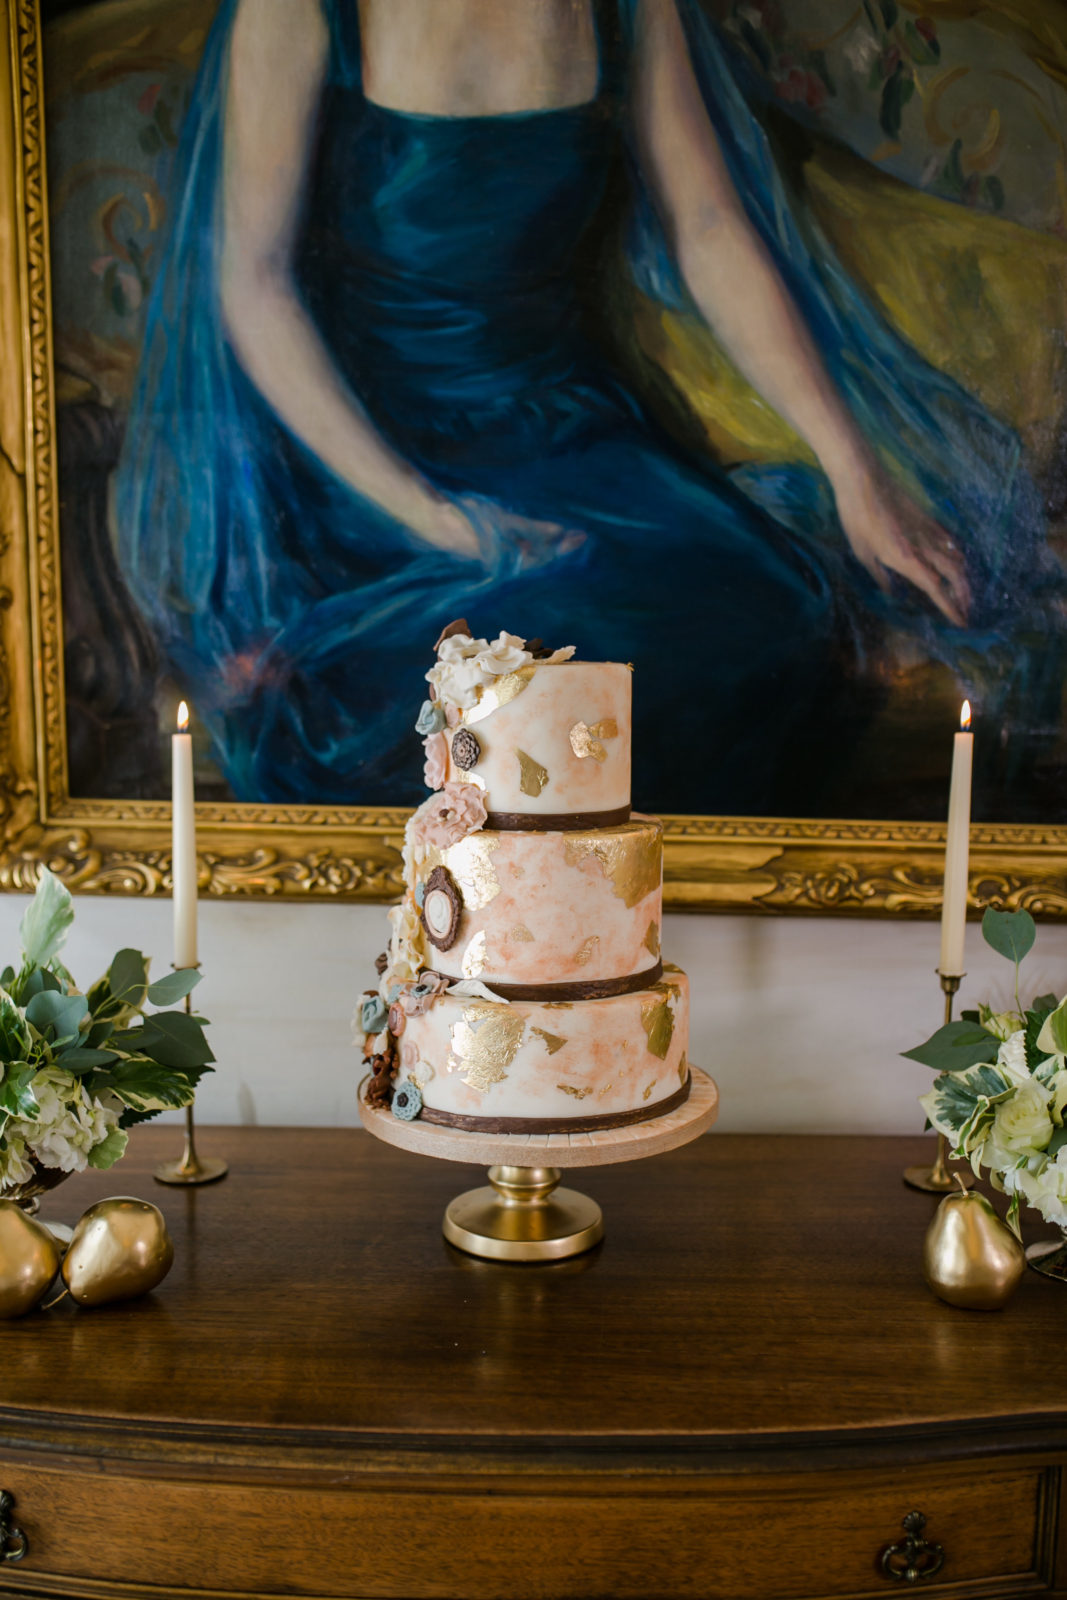 Very intricate overdone wedding cake